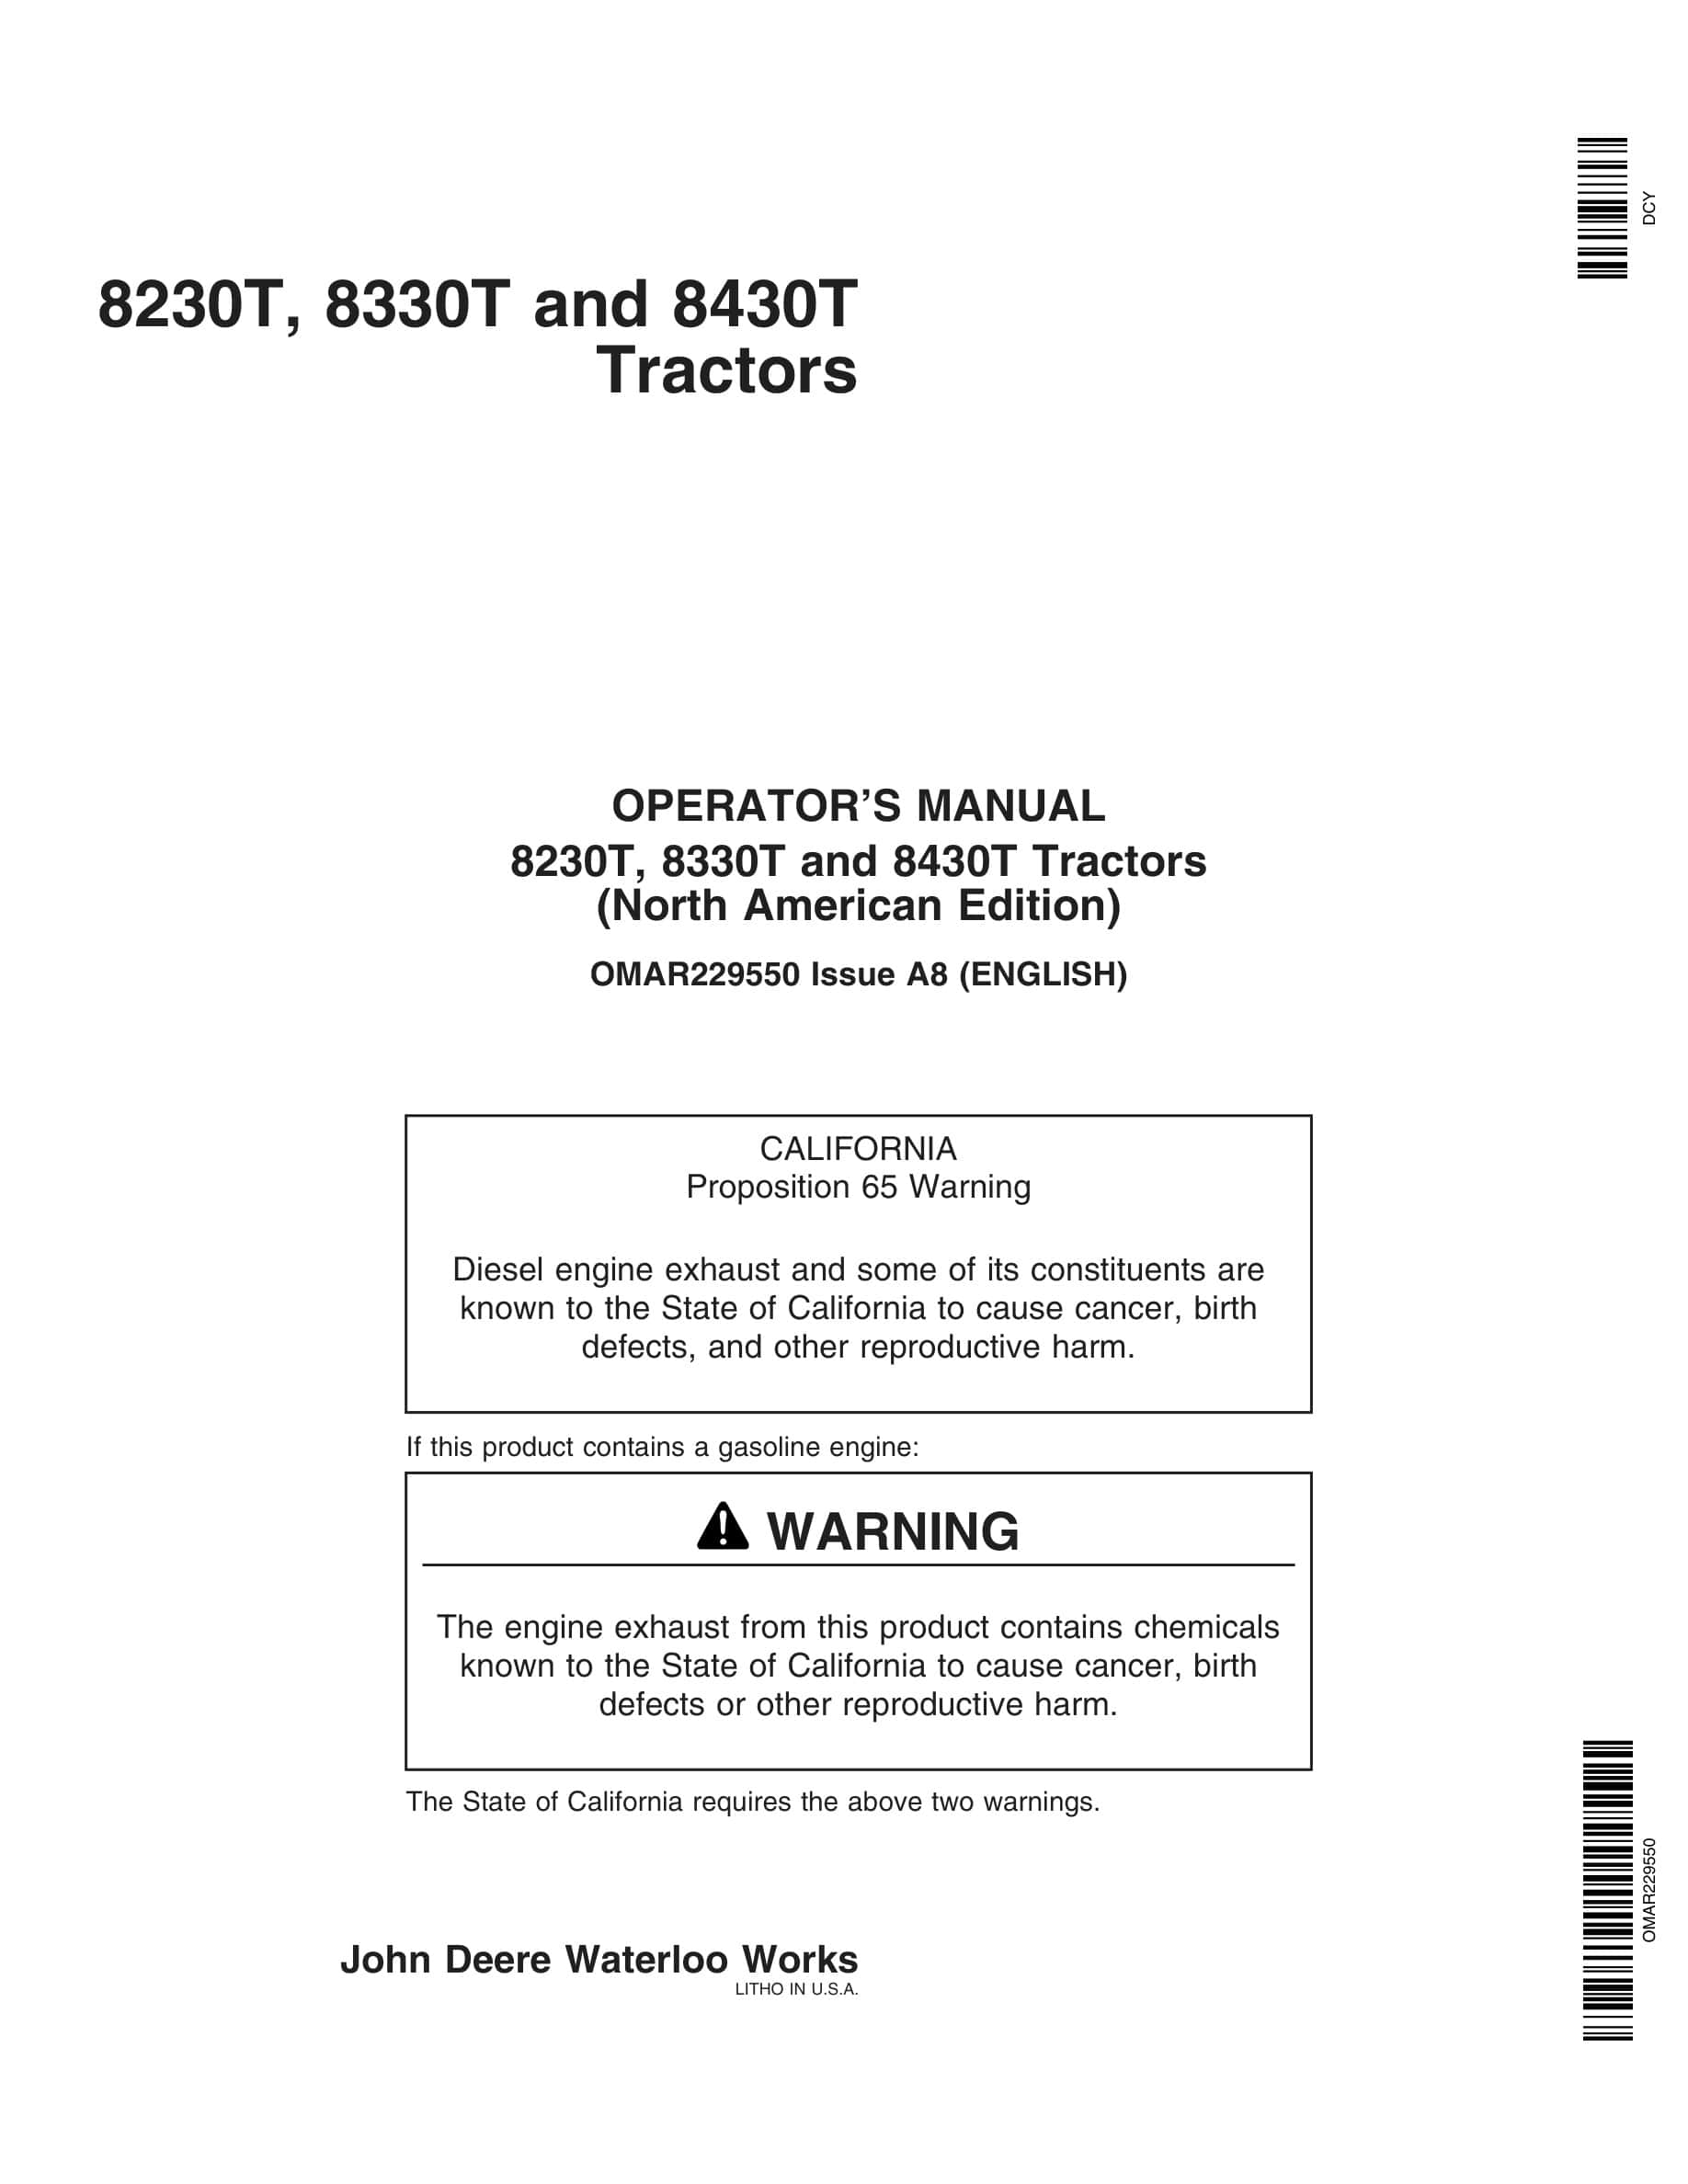 John Deere 8230T, 8330T and 8430T Tractor Operator Manual OMAR229550-1